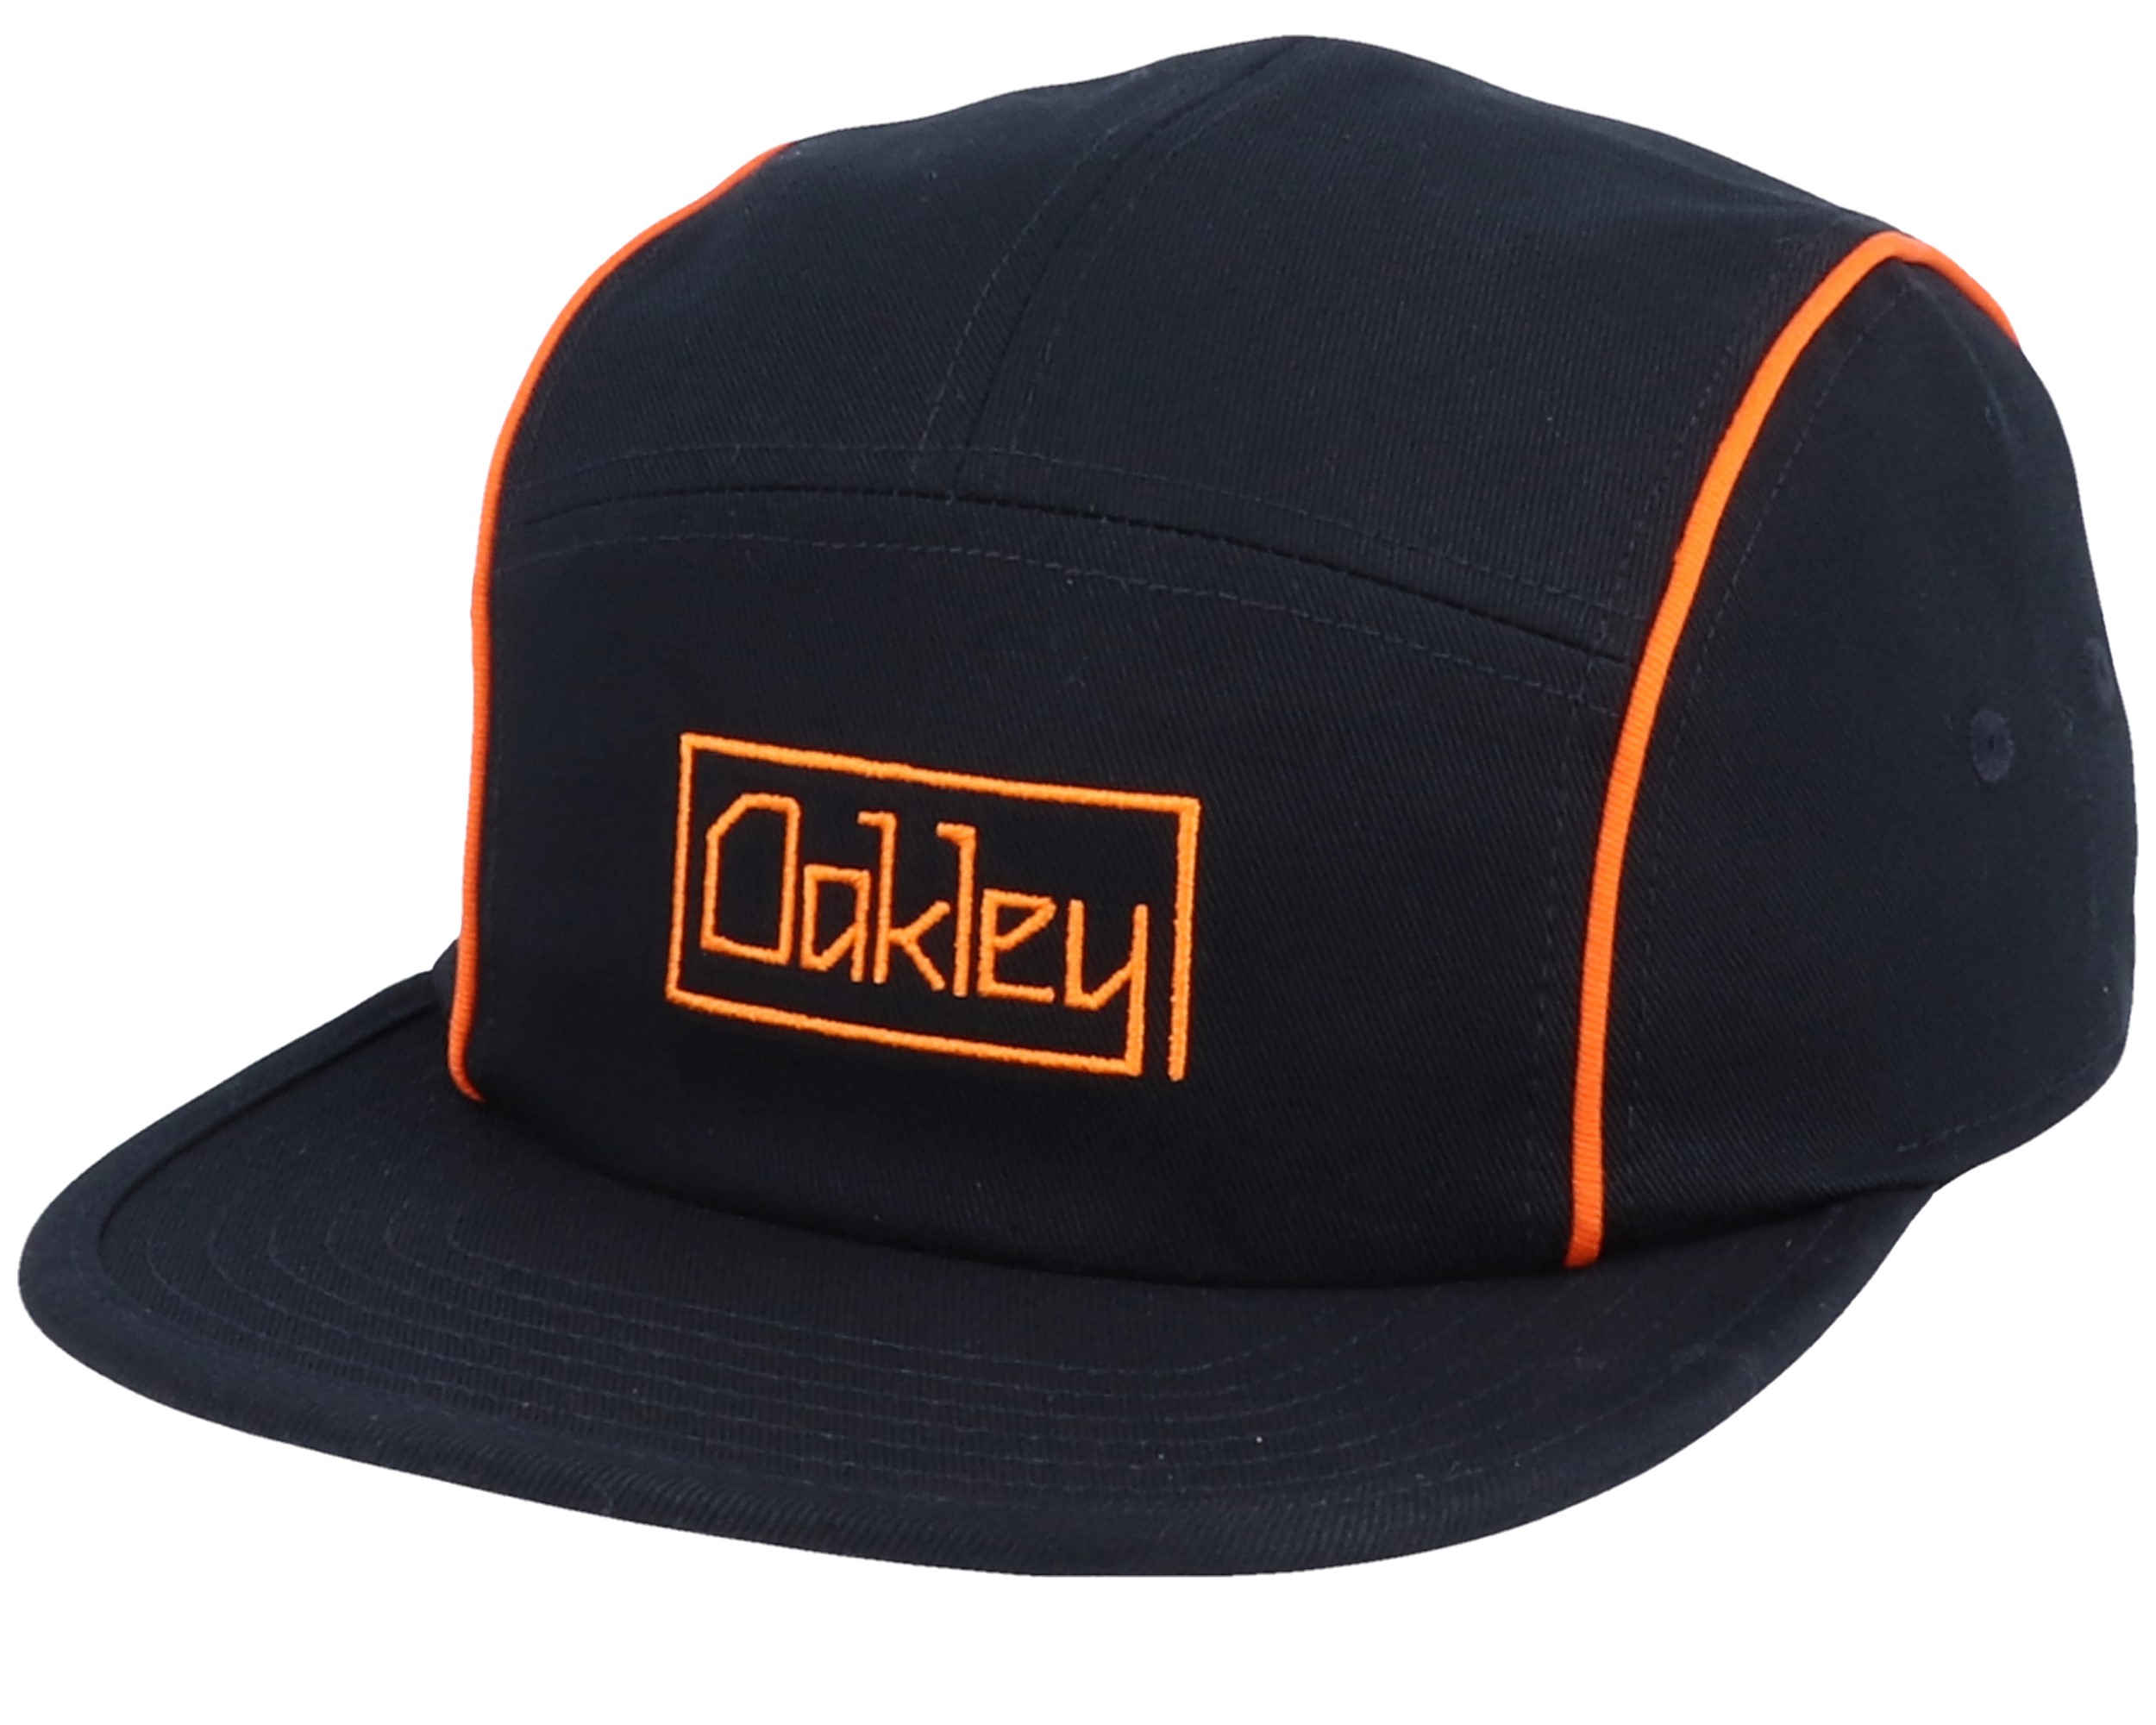 Pipe Black/Orange 5-Panel - Oakley caps - Hatstore.sg